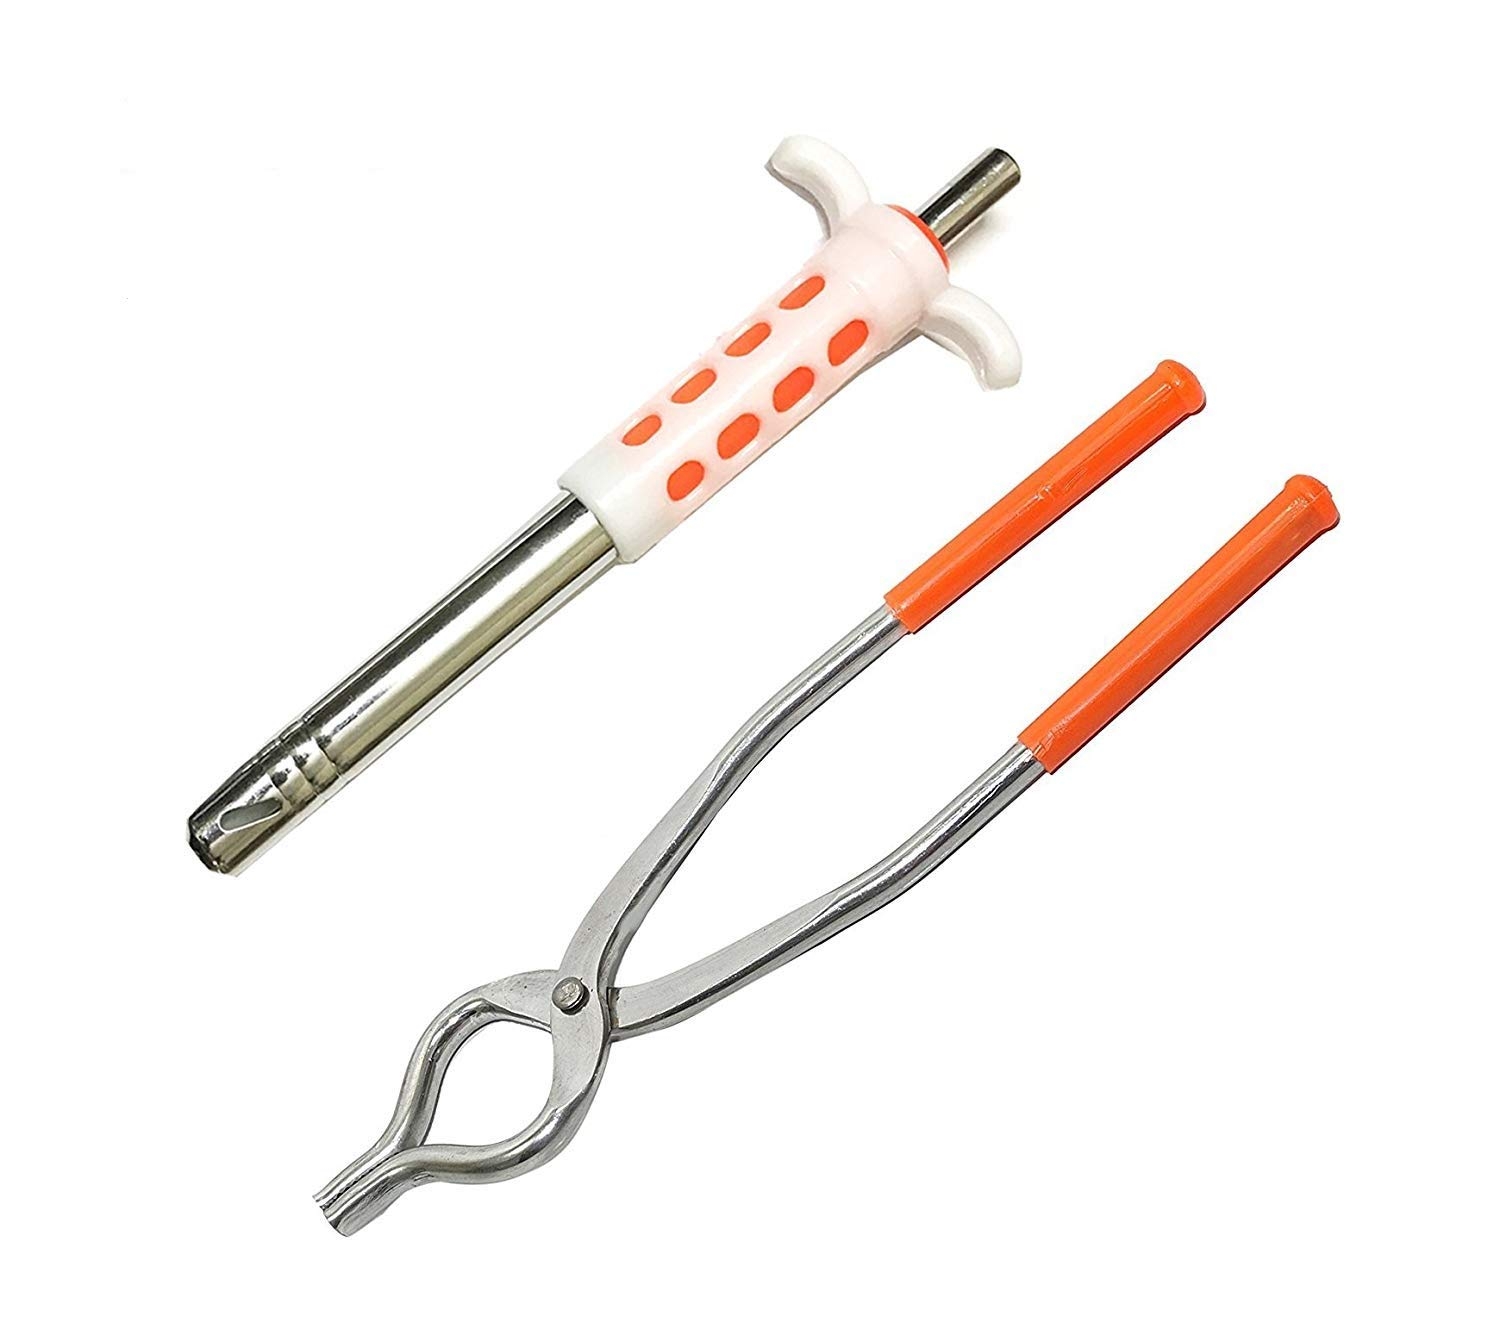 TULMAN Combo of Steel Spark Lighter, Stainless Steel Sandsi for Kitchen Tools Utensils Holder Gas Lighters